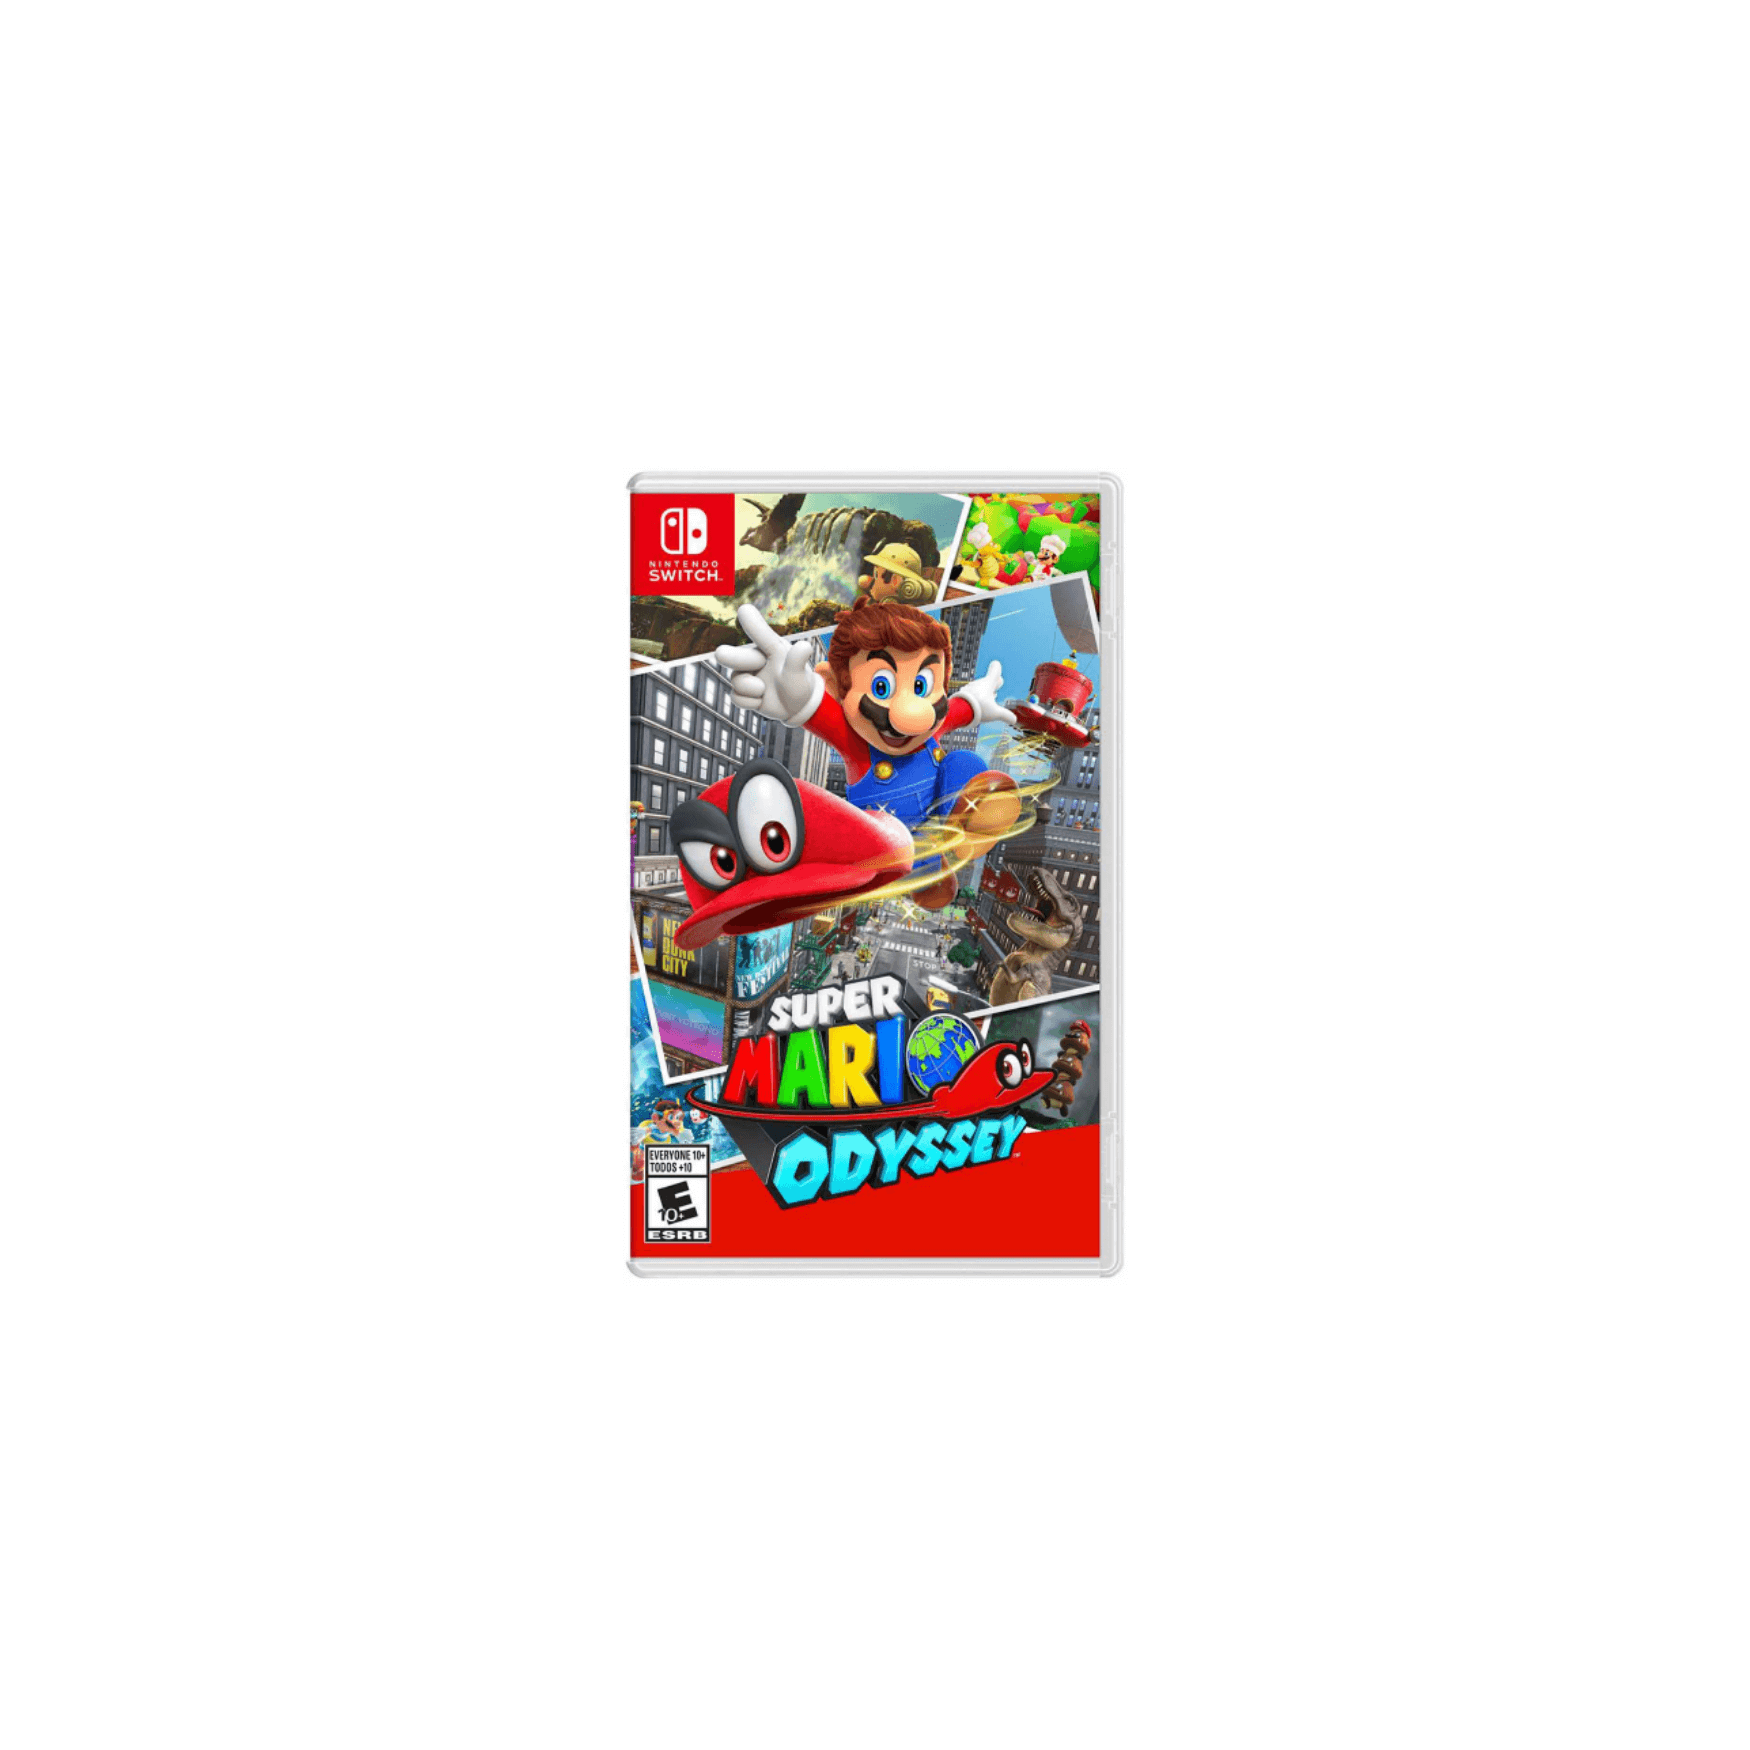 Nintendo Switch Game Super Mario Odyssey - for Nintendo Switch